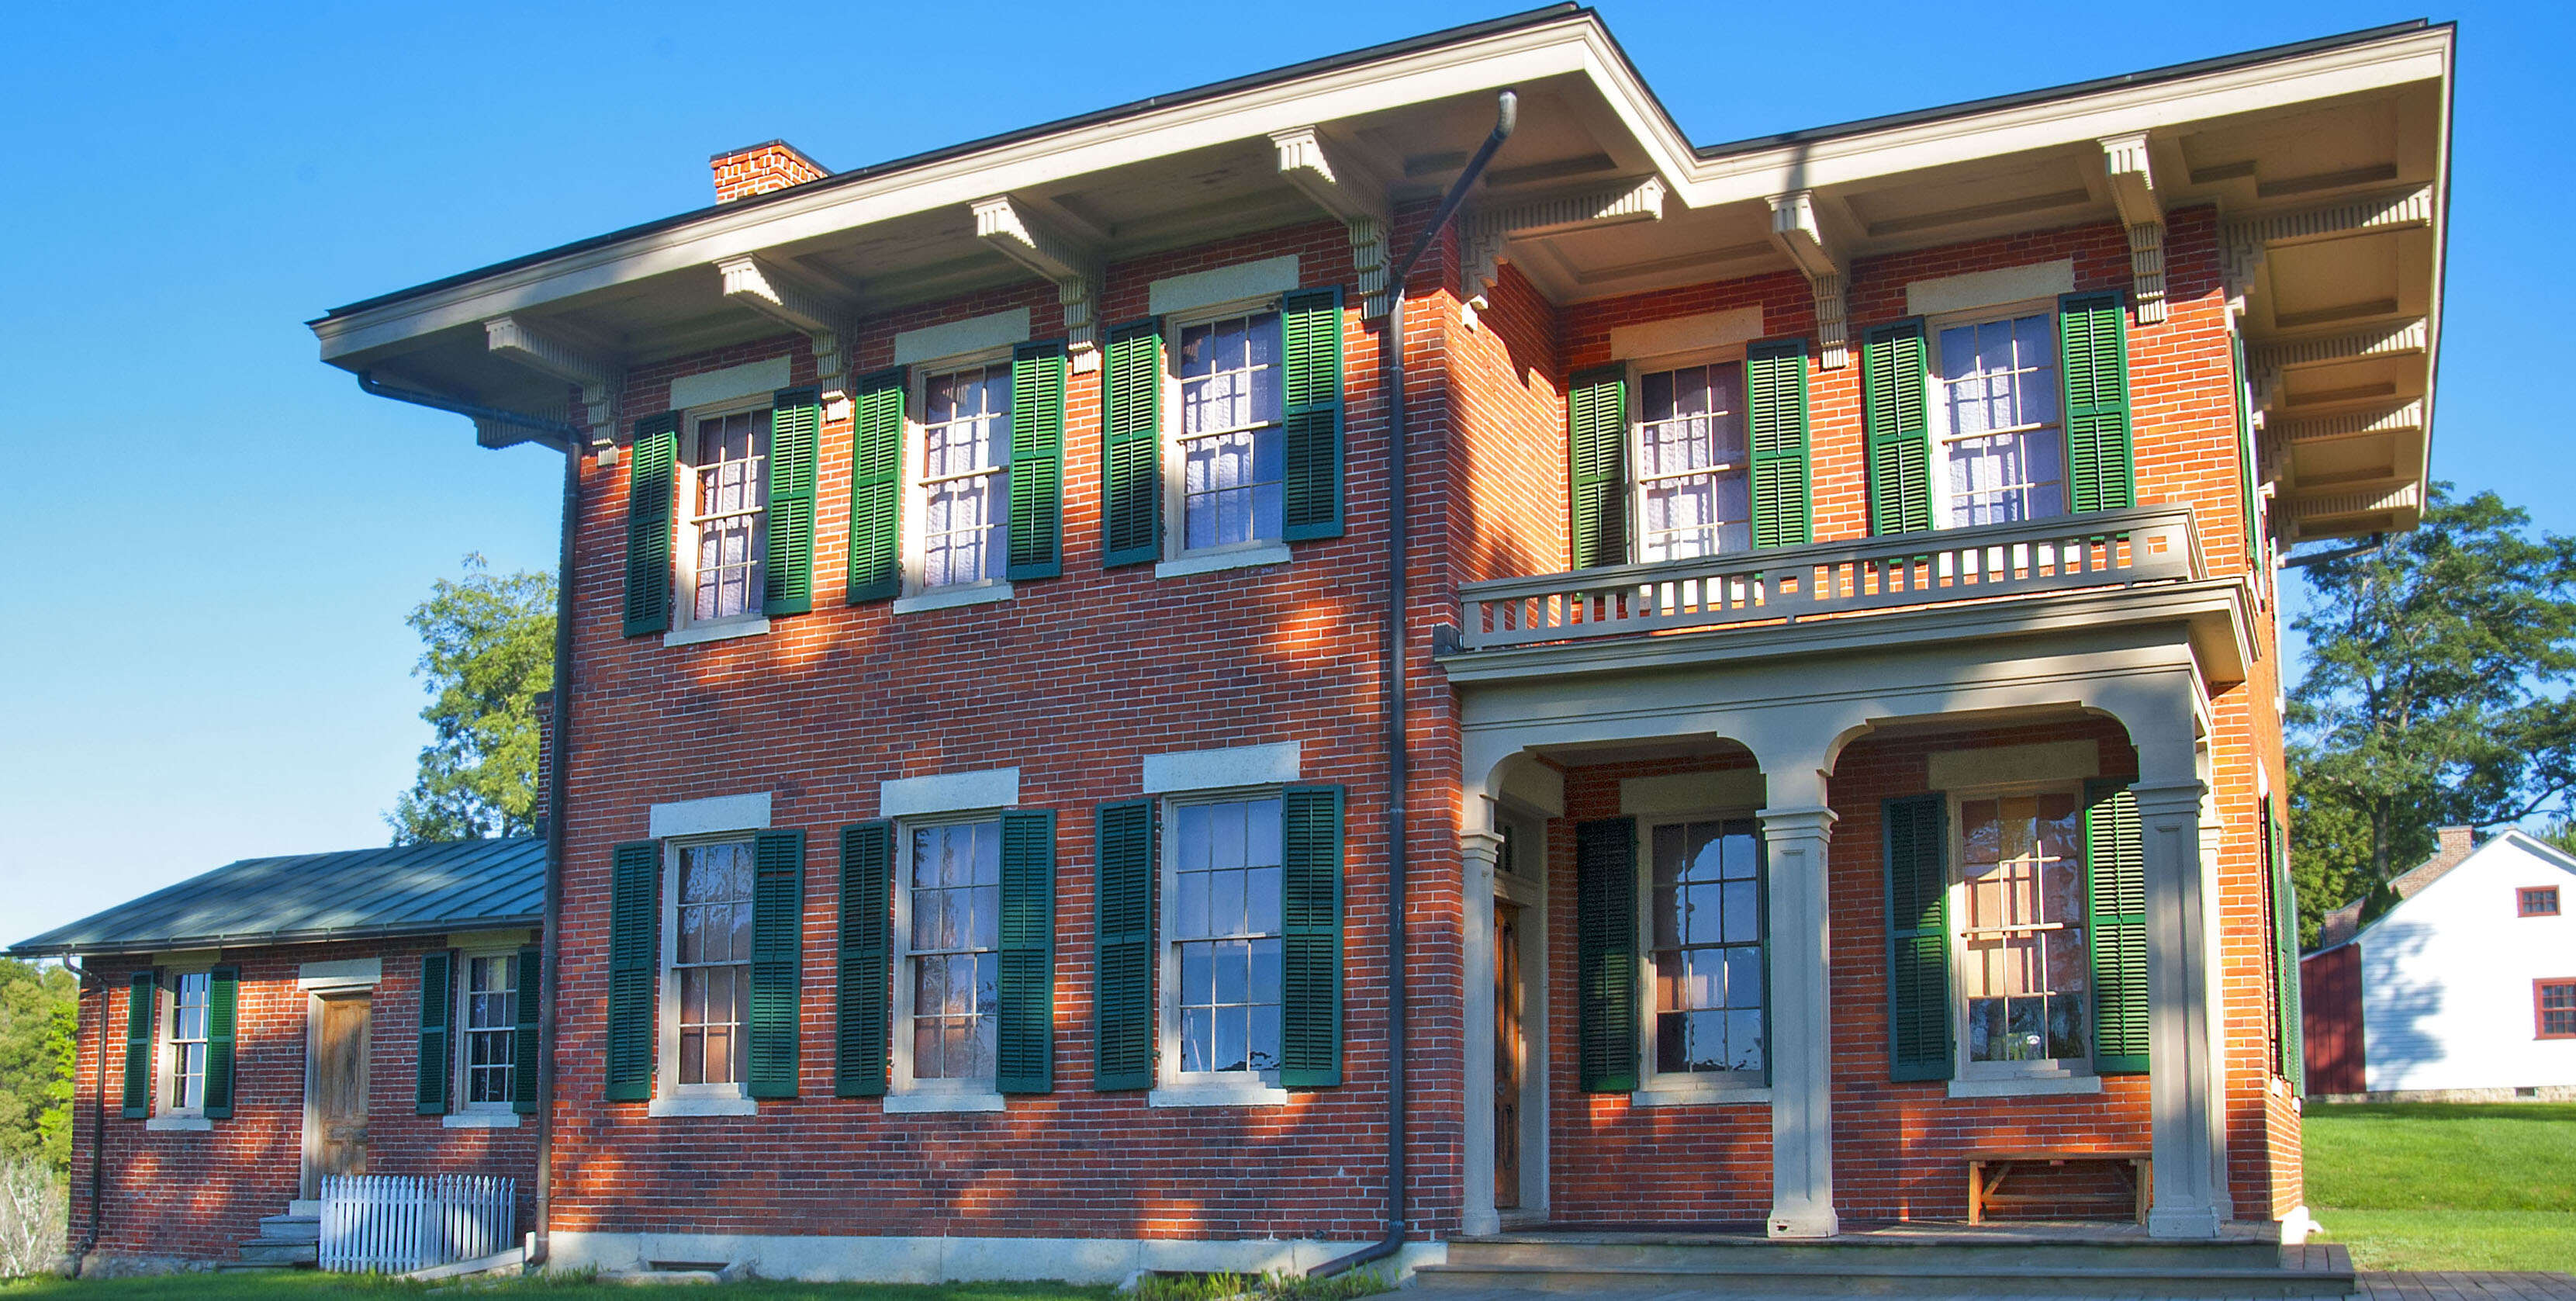 Ulysses S. Grant House